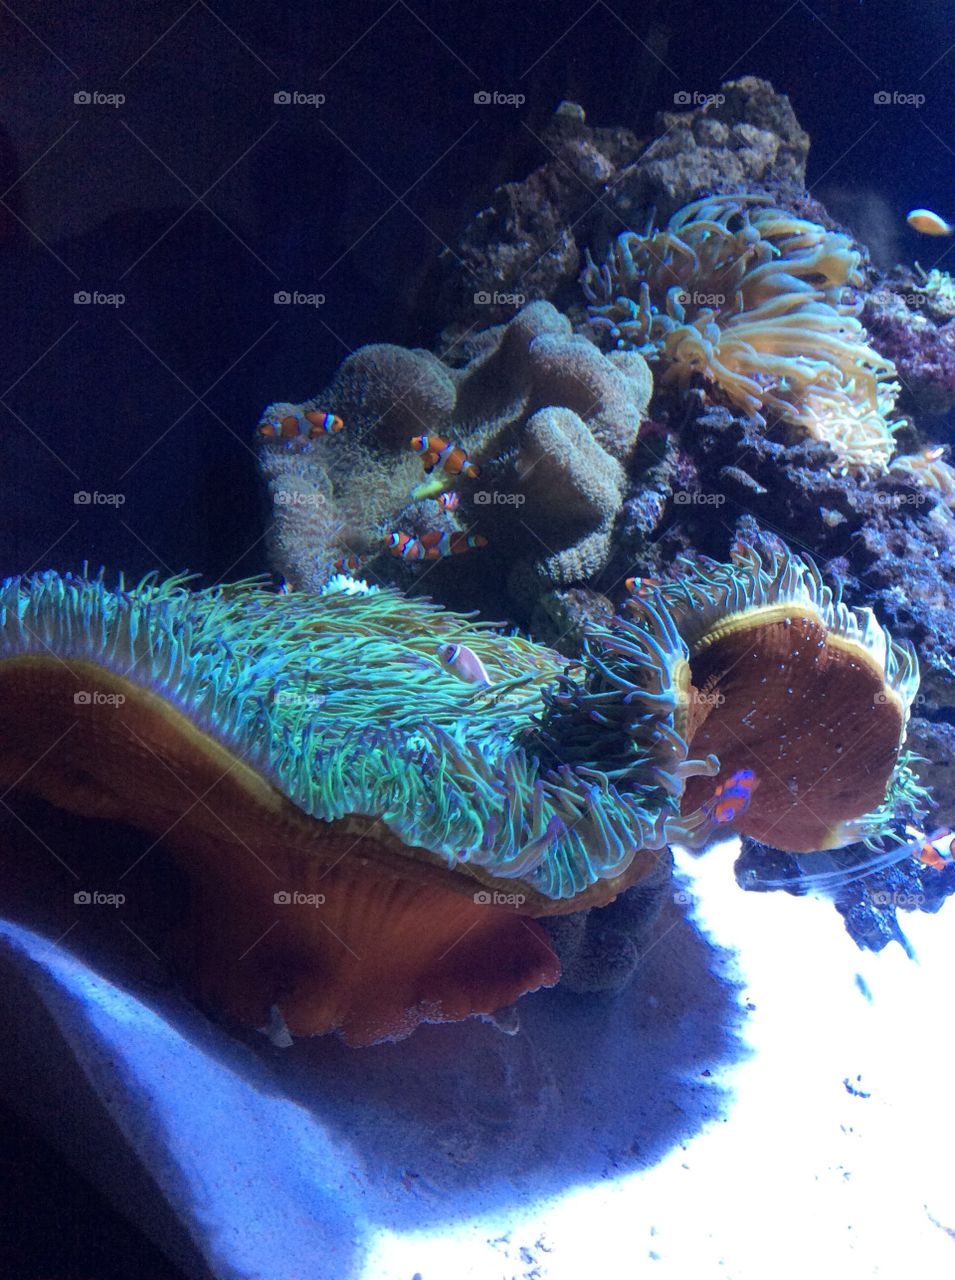 Nemo has some friends